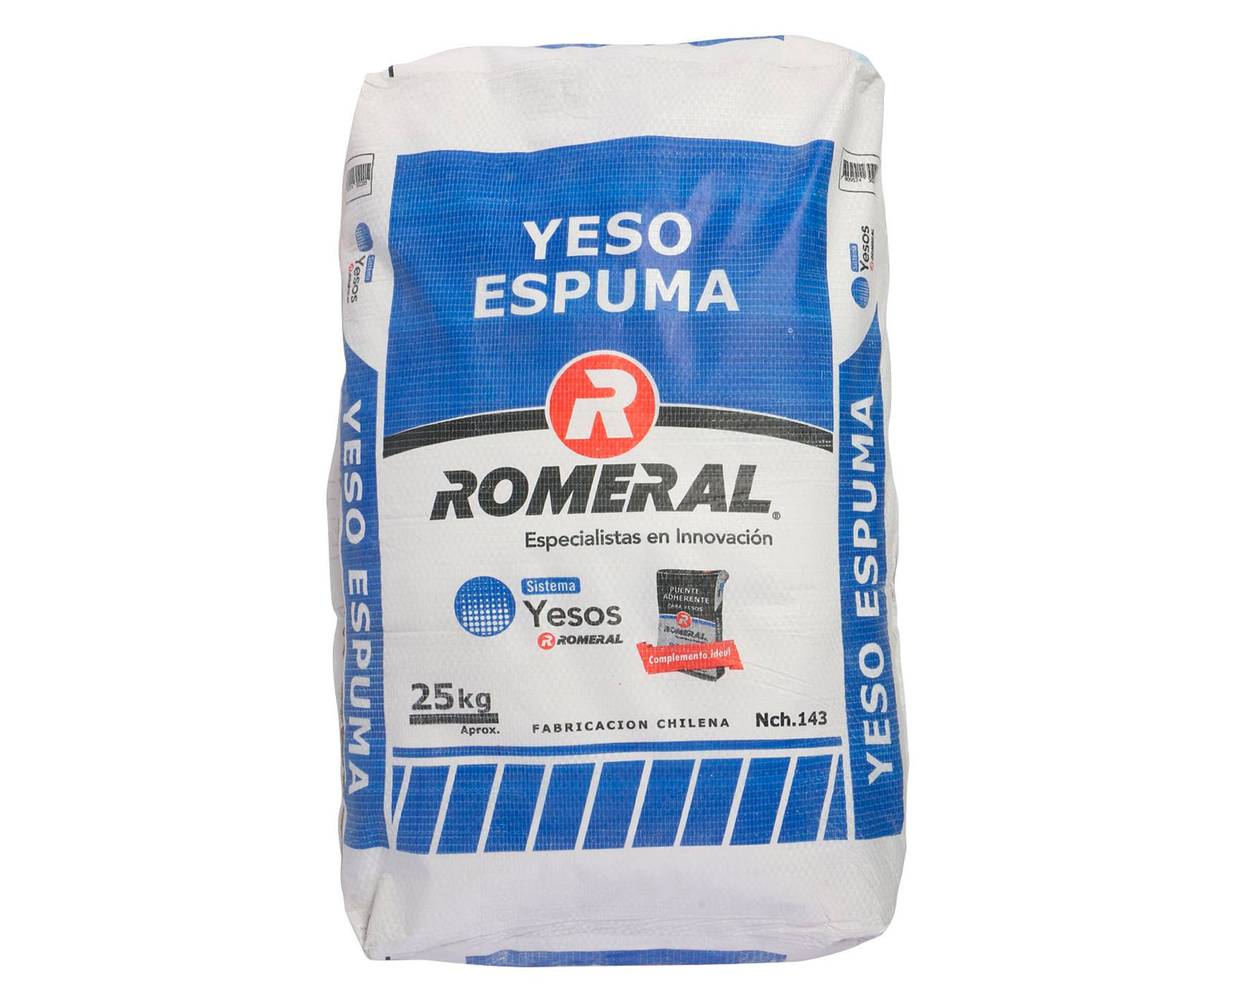 Romeral yeso espuma (saco 25 kg)